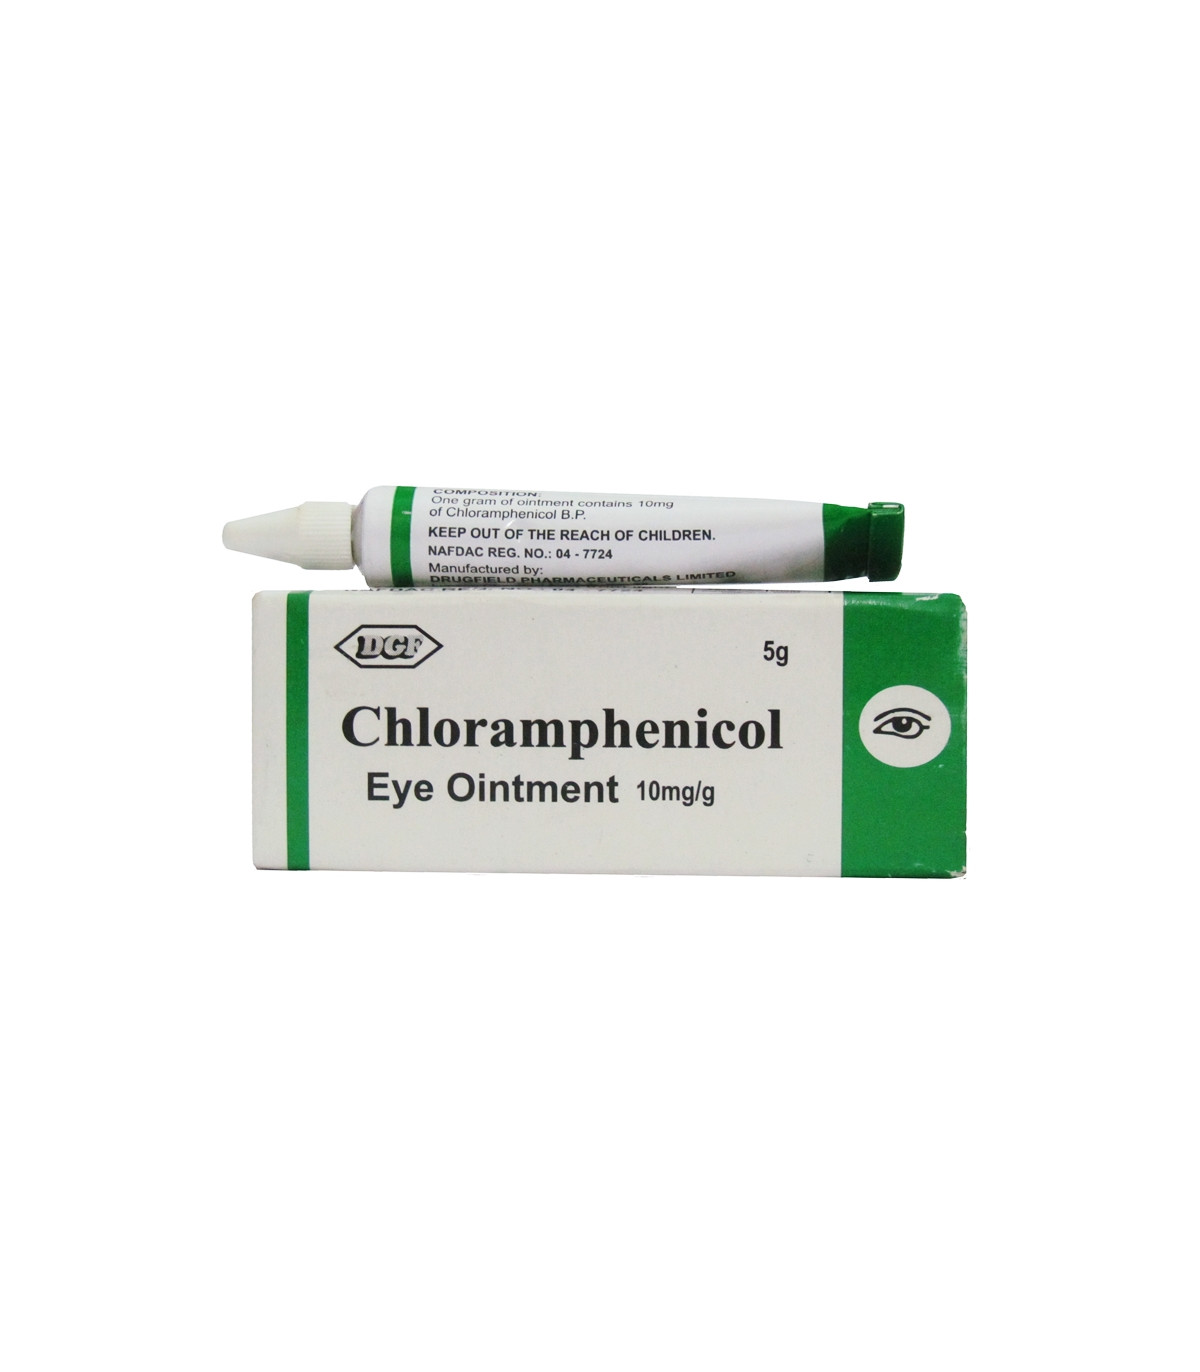 Drugfield Chloramphenicol Eye Ointment - 5g